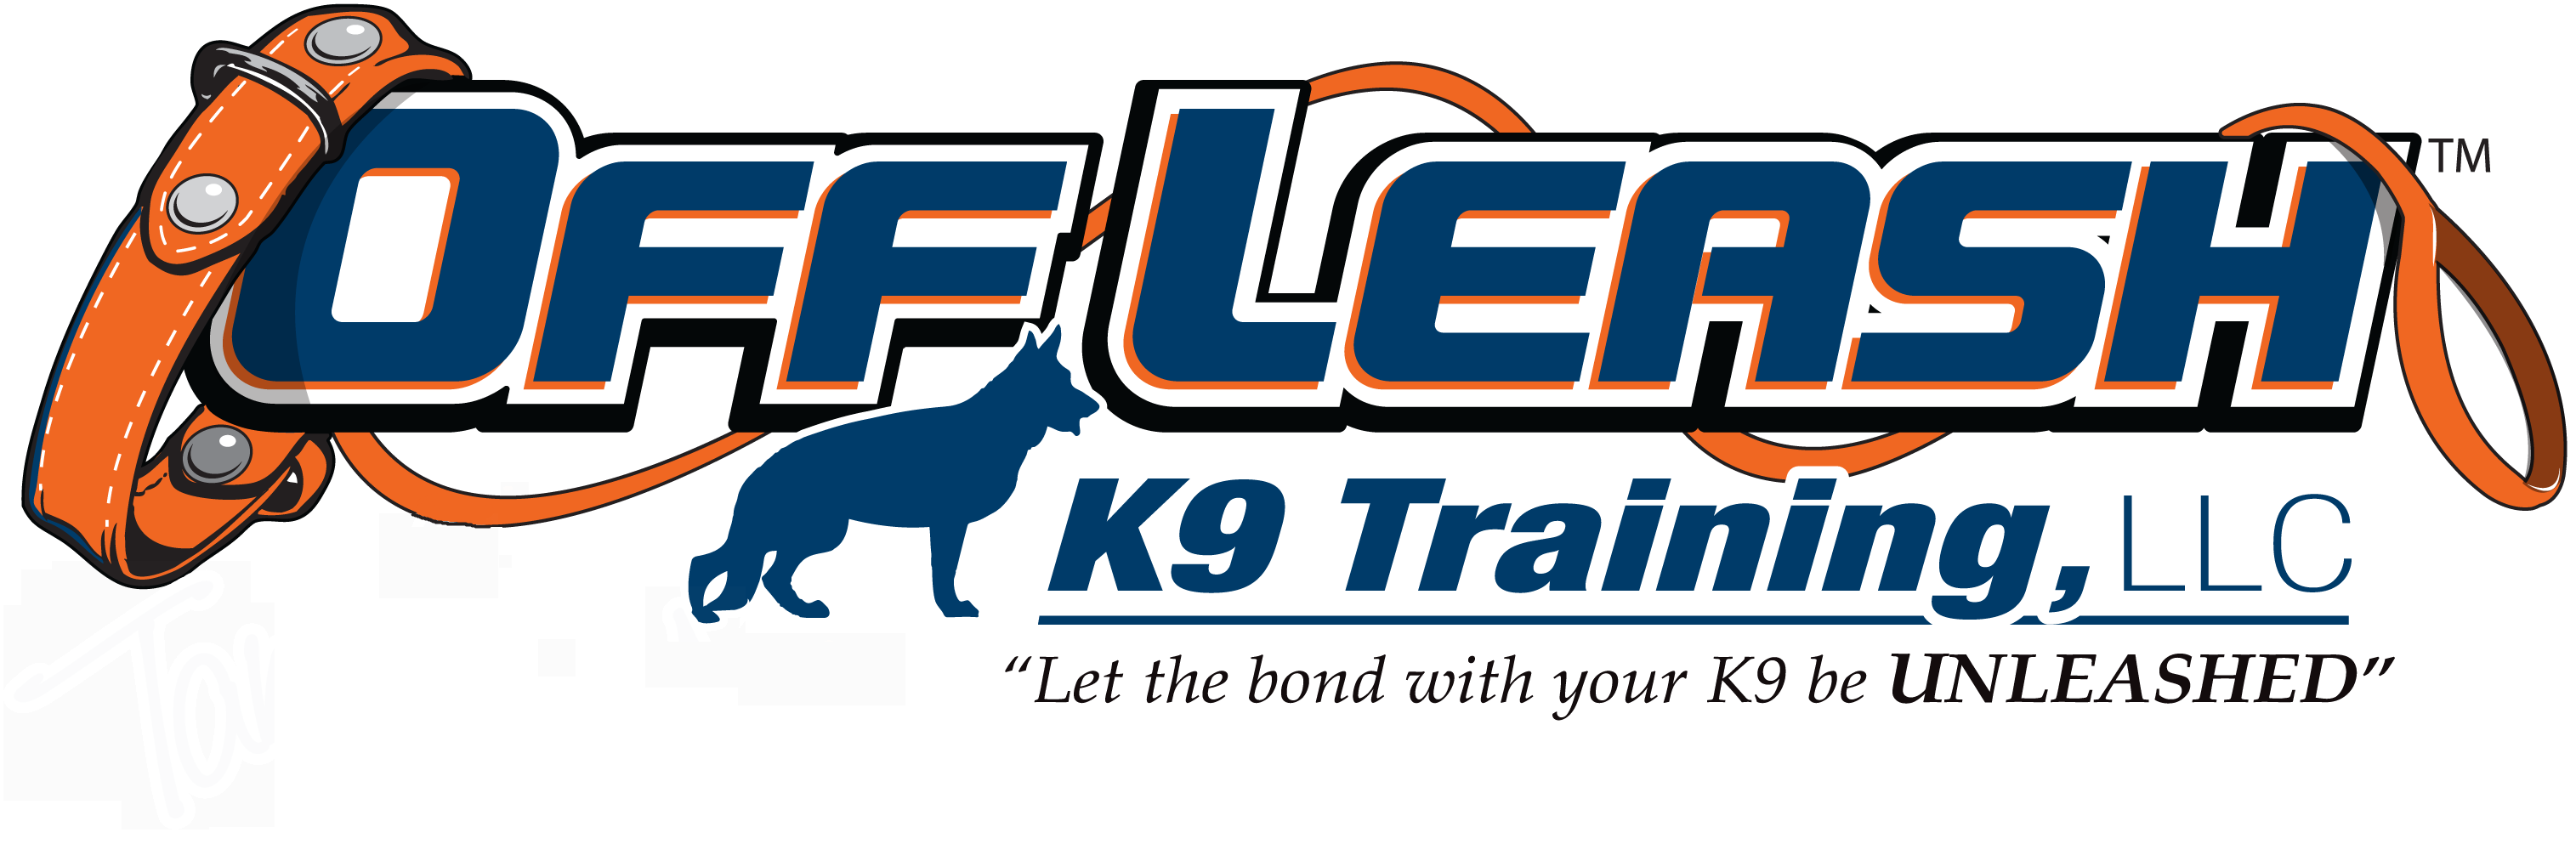 Stamford CT Offleash K9 Dog Training